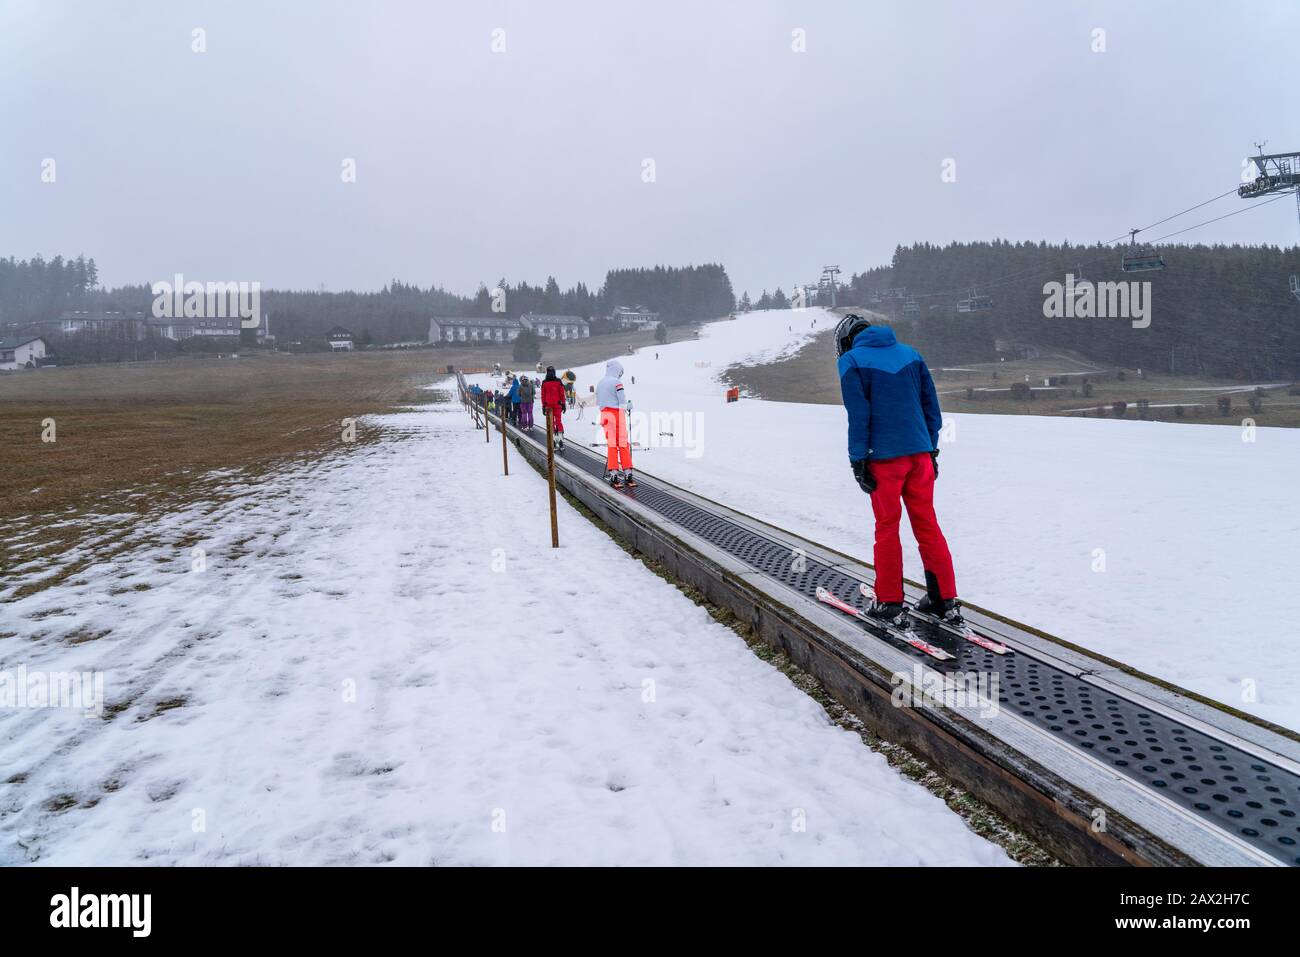 Conveyor belt ski lift, beginners ski area Ritzhagen, operated with ...